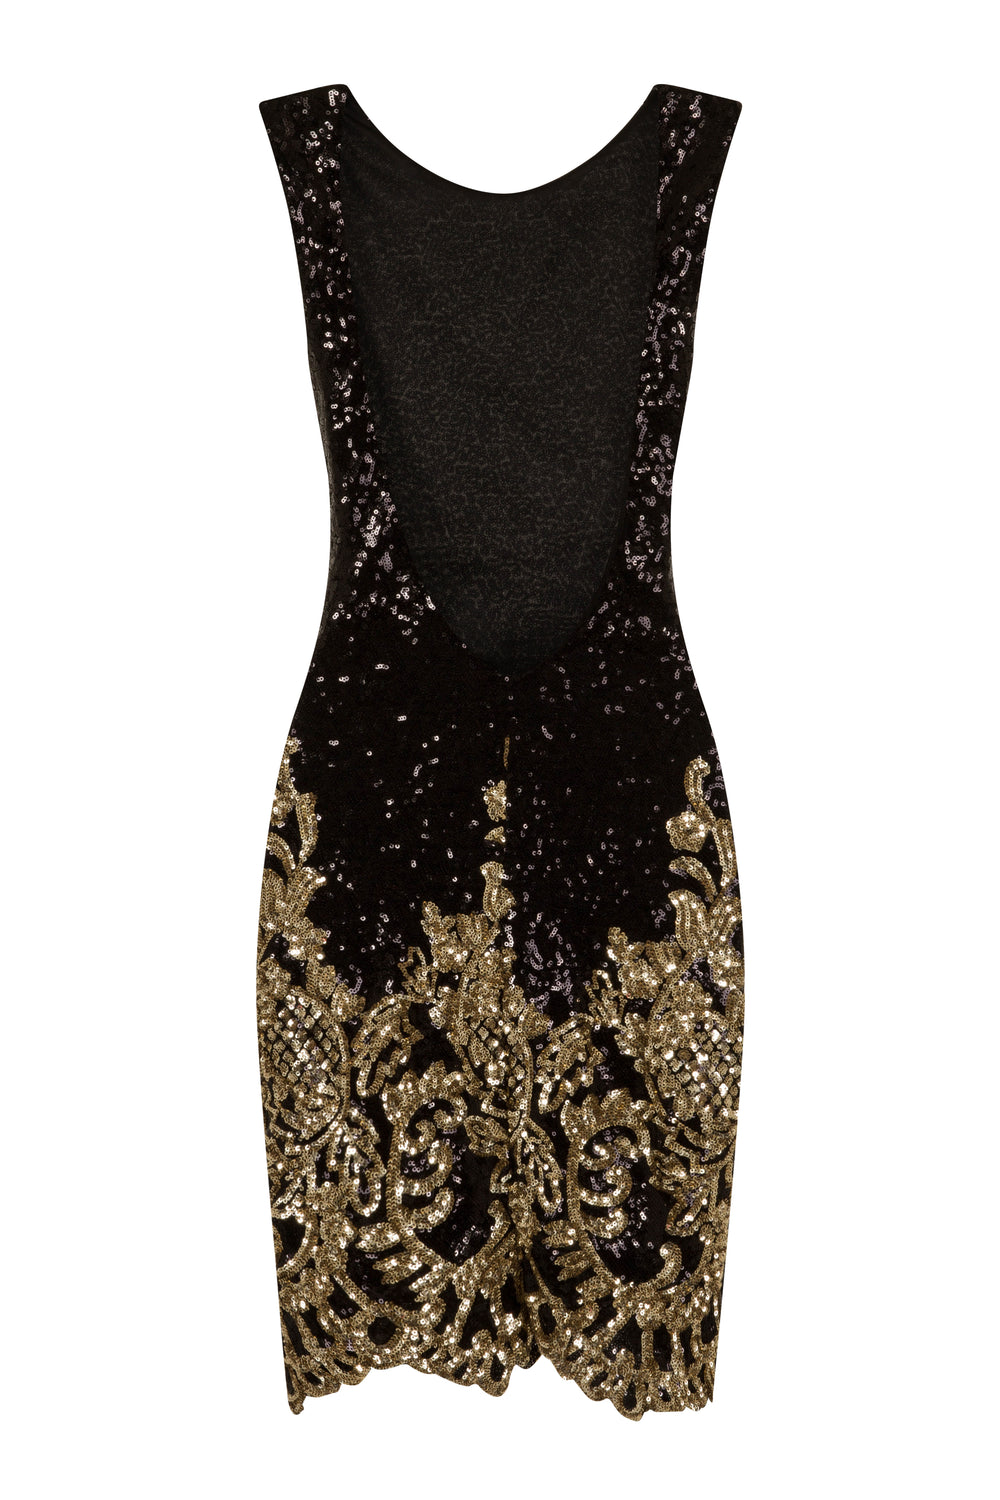 Alyssa Glam Gold Sequin Exposed Open Back Victorian Mini Dress